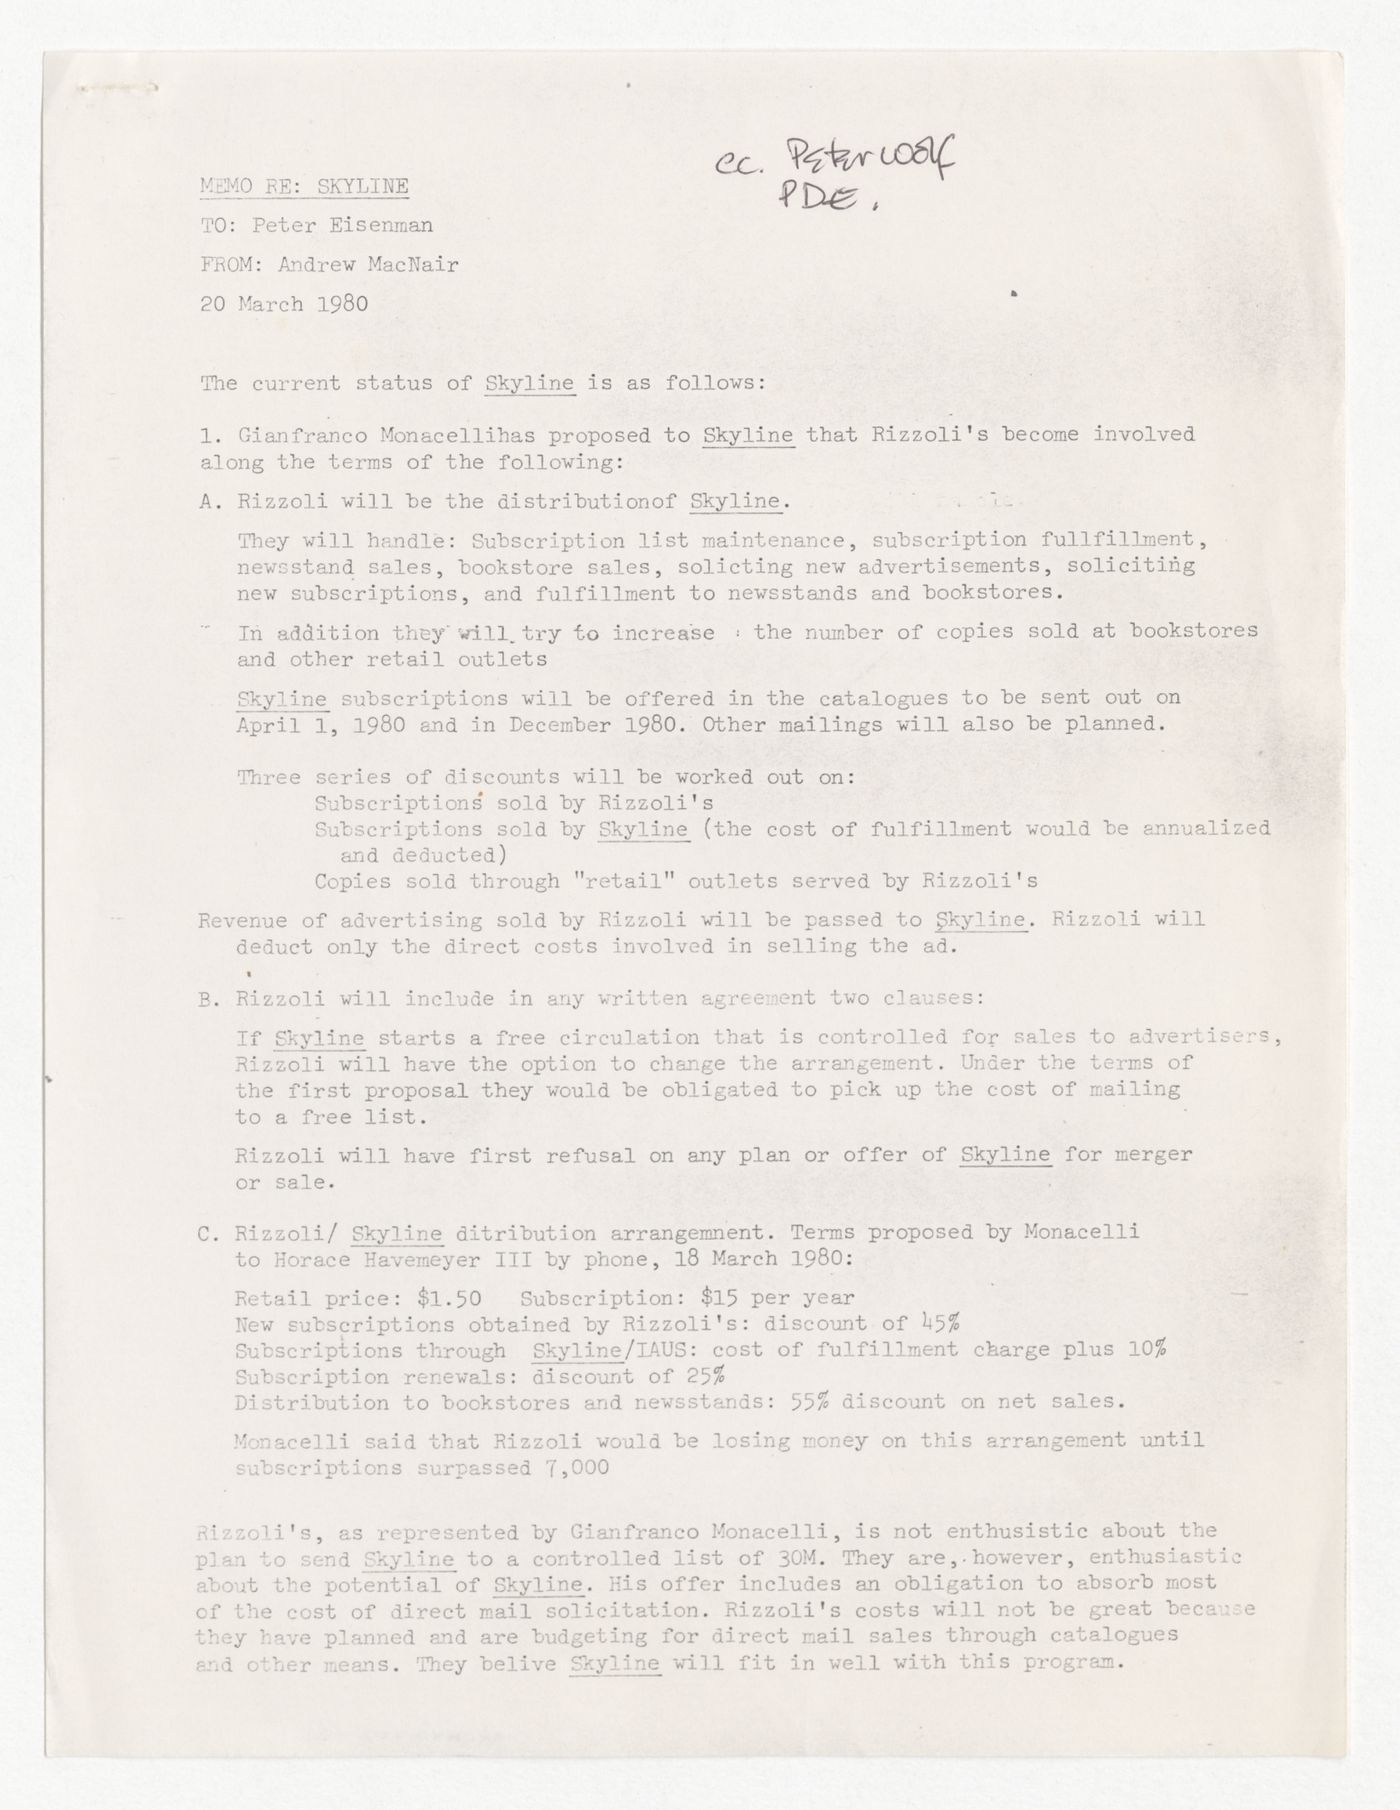 Memorandum from Andrew MacNair to Peter D. Eisenman about current status of Skyline